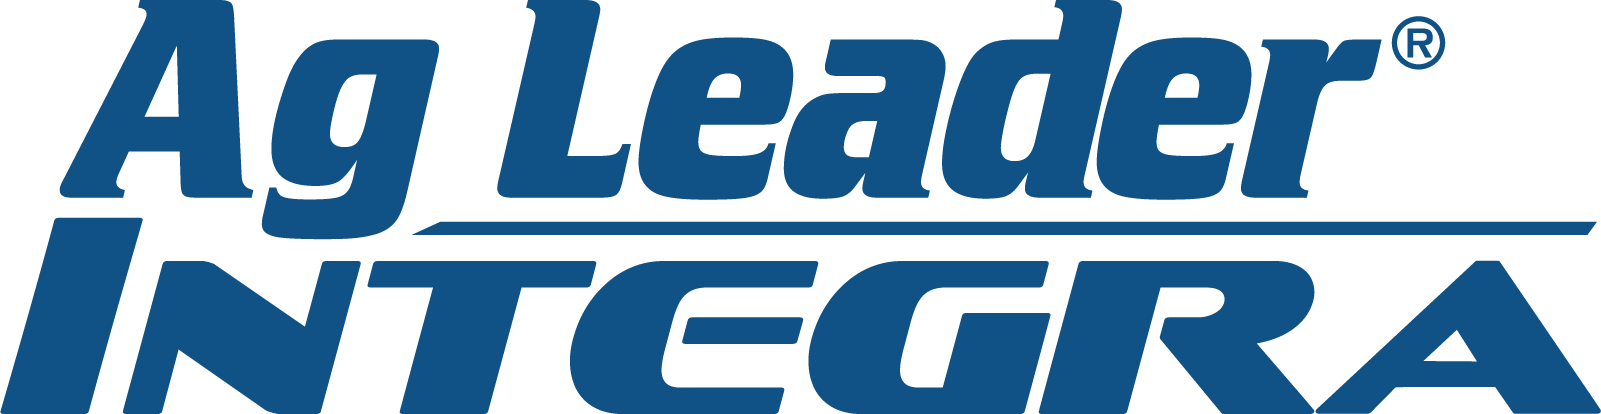 Ag Leader Technology Logo photo - 1